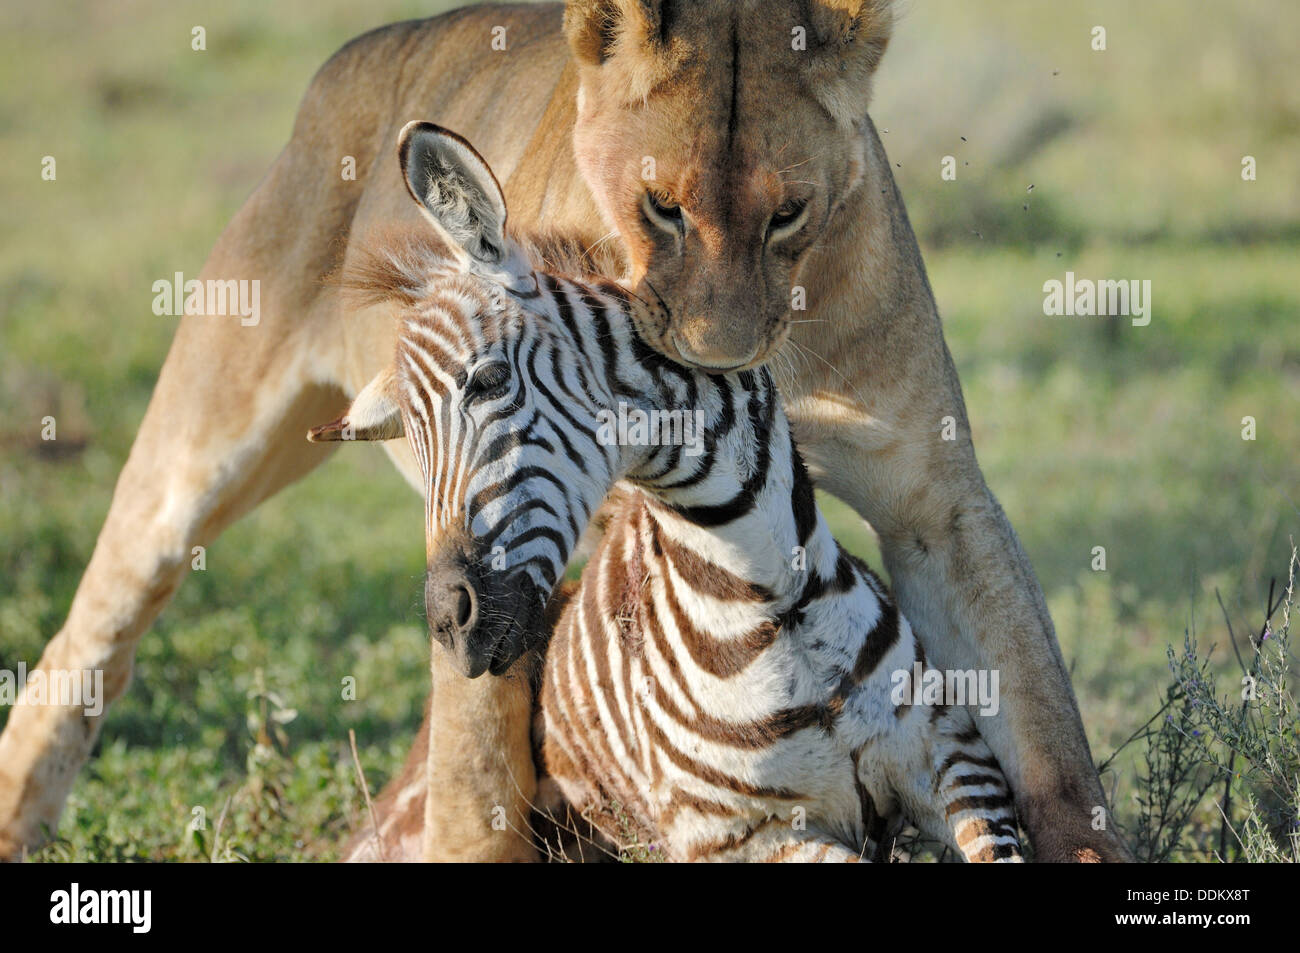 lioness hunting zebra